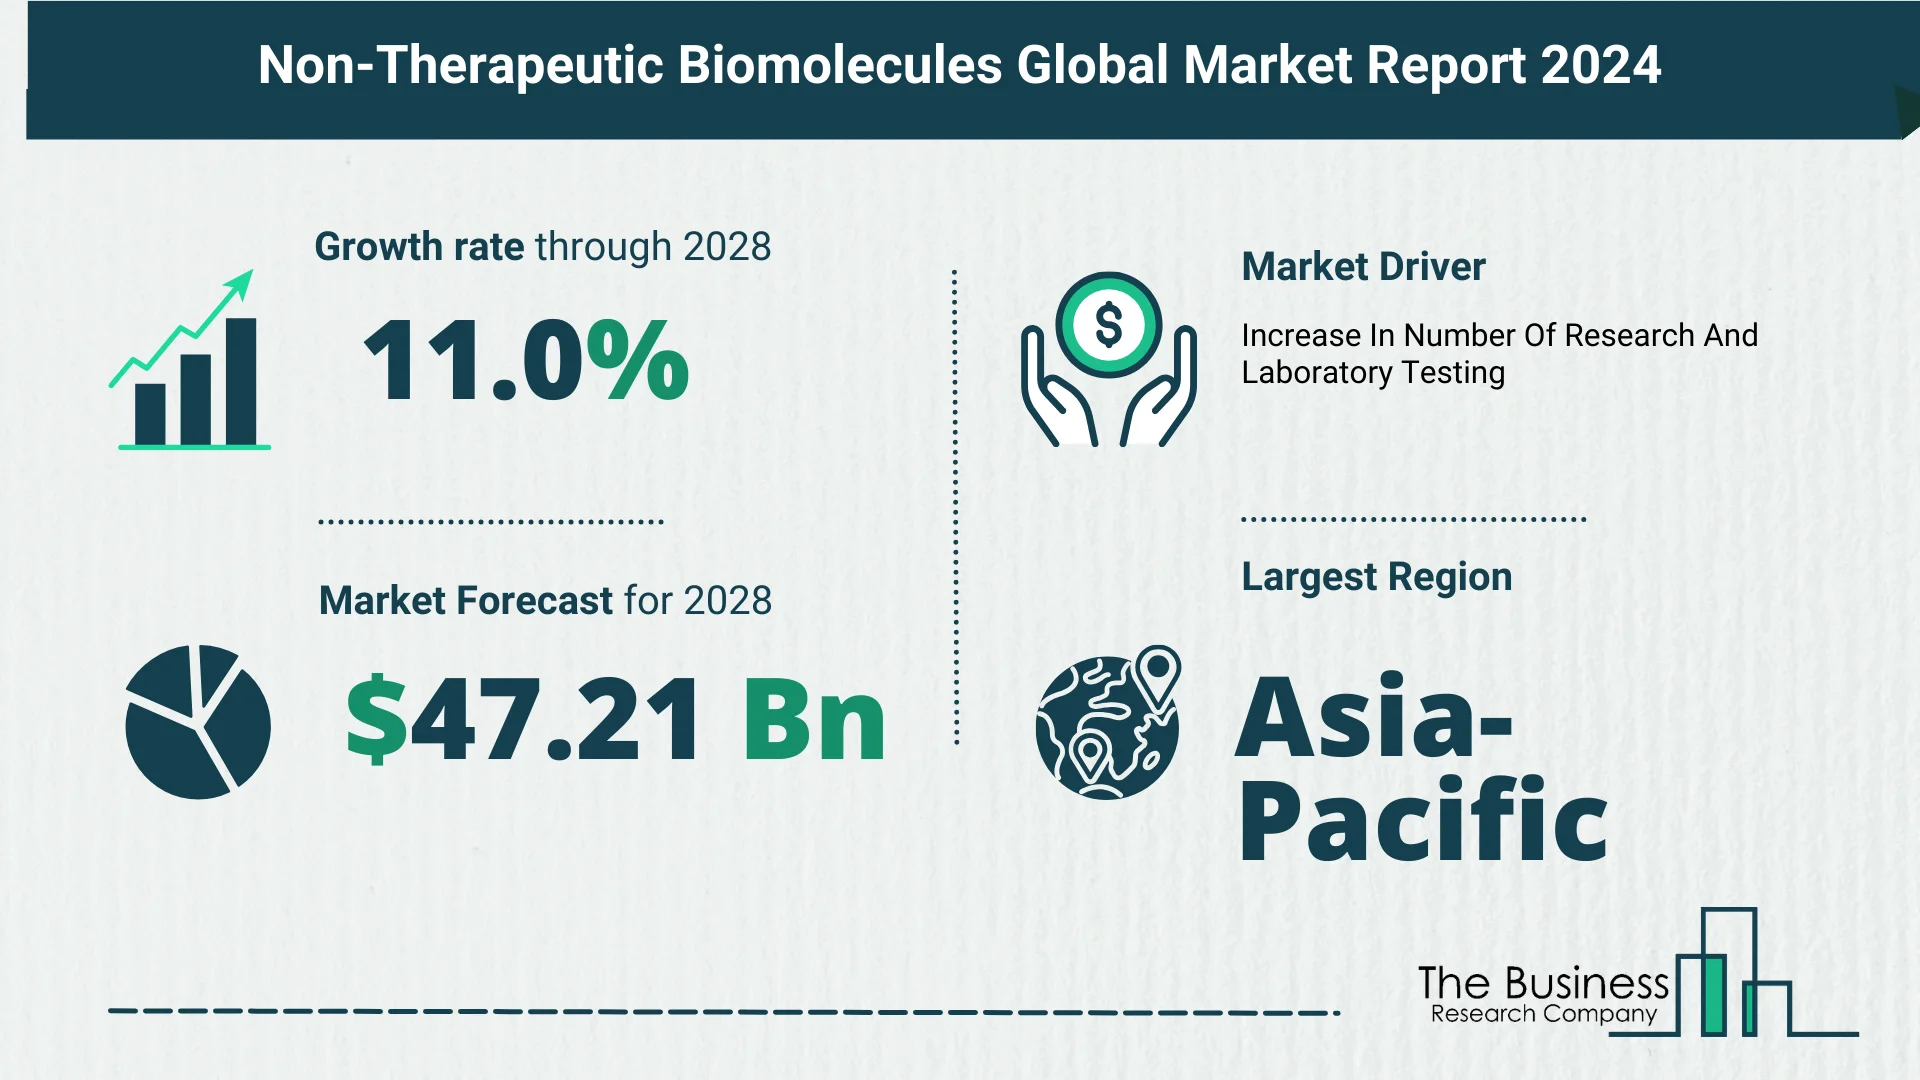 Global Non-Therapeutic Biomolecules Market Size